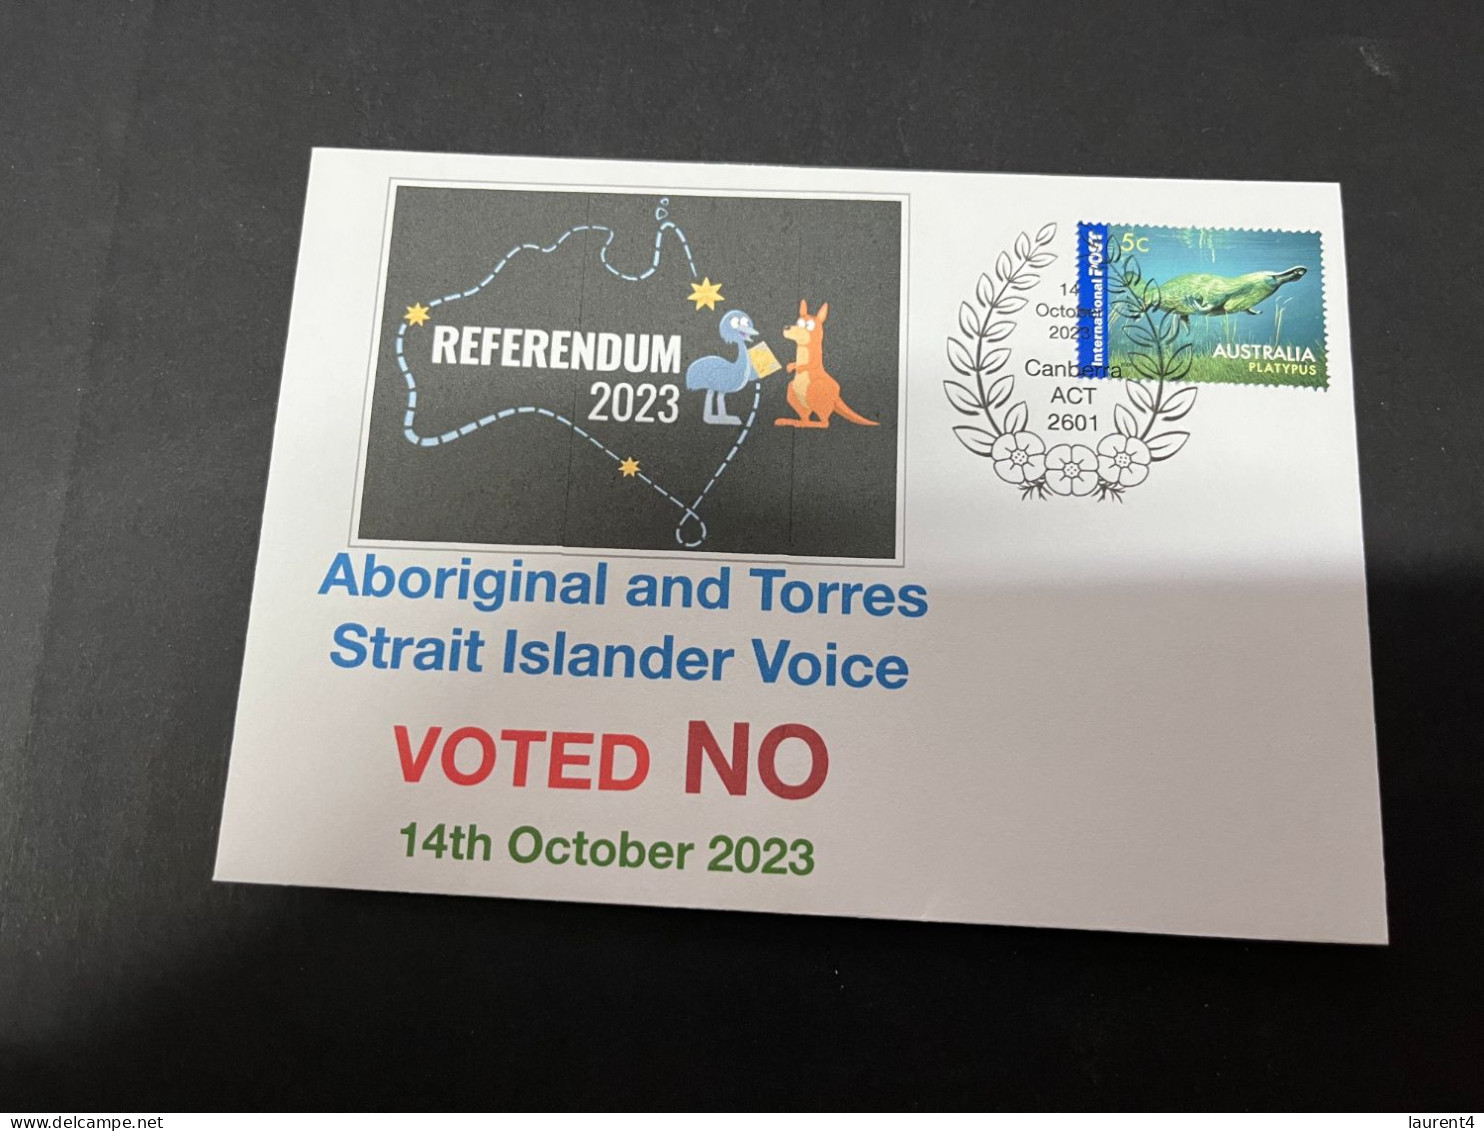 14-10-2023 (4 T 21) Australia Referendum 14-10-2023 - Aborignal & Torres Strait Islander Voice - Voted NO - Covers & Documents